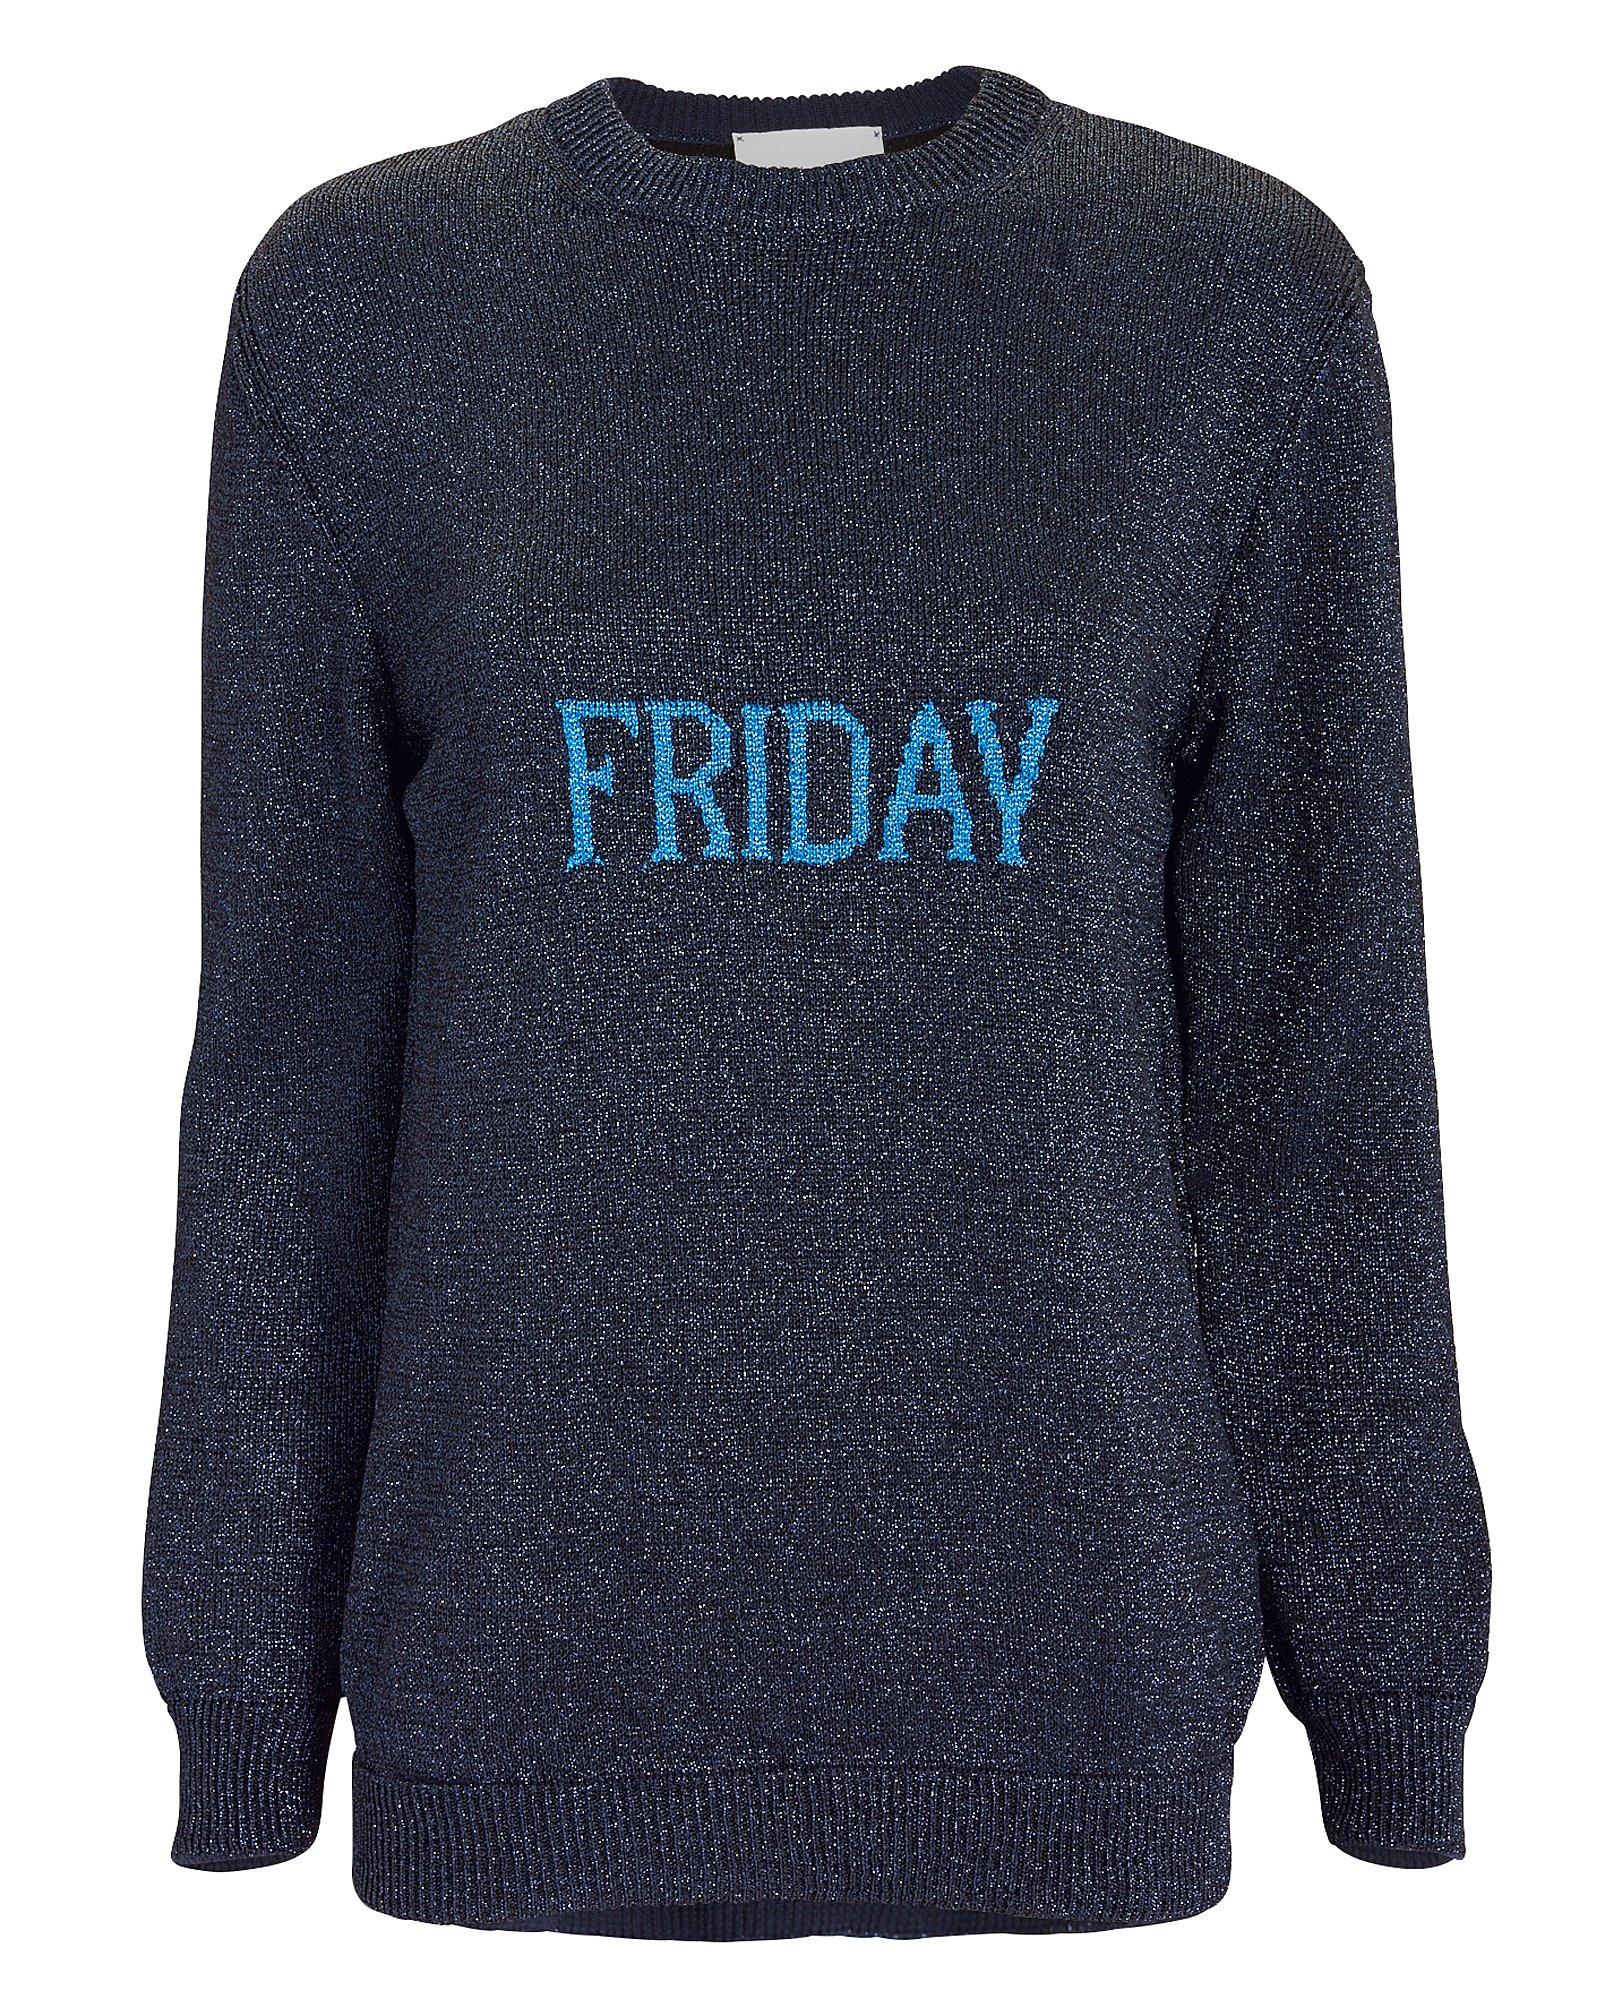 Lyst - Alberta Ferretti Friday Sweater in Blue - Save 34%